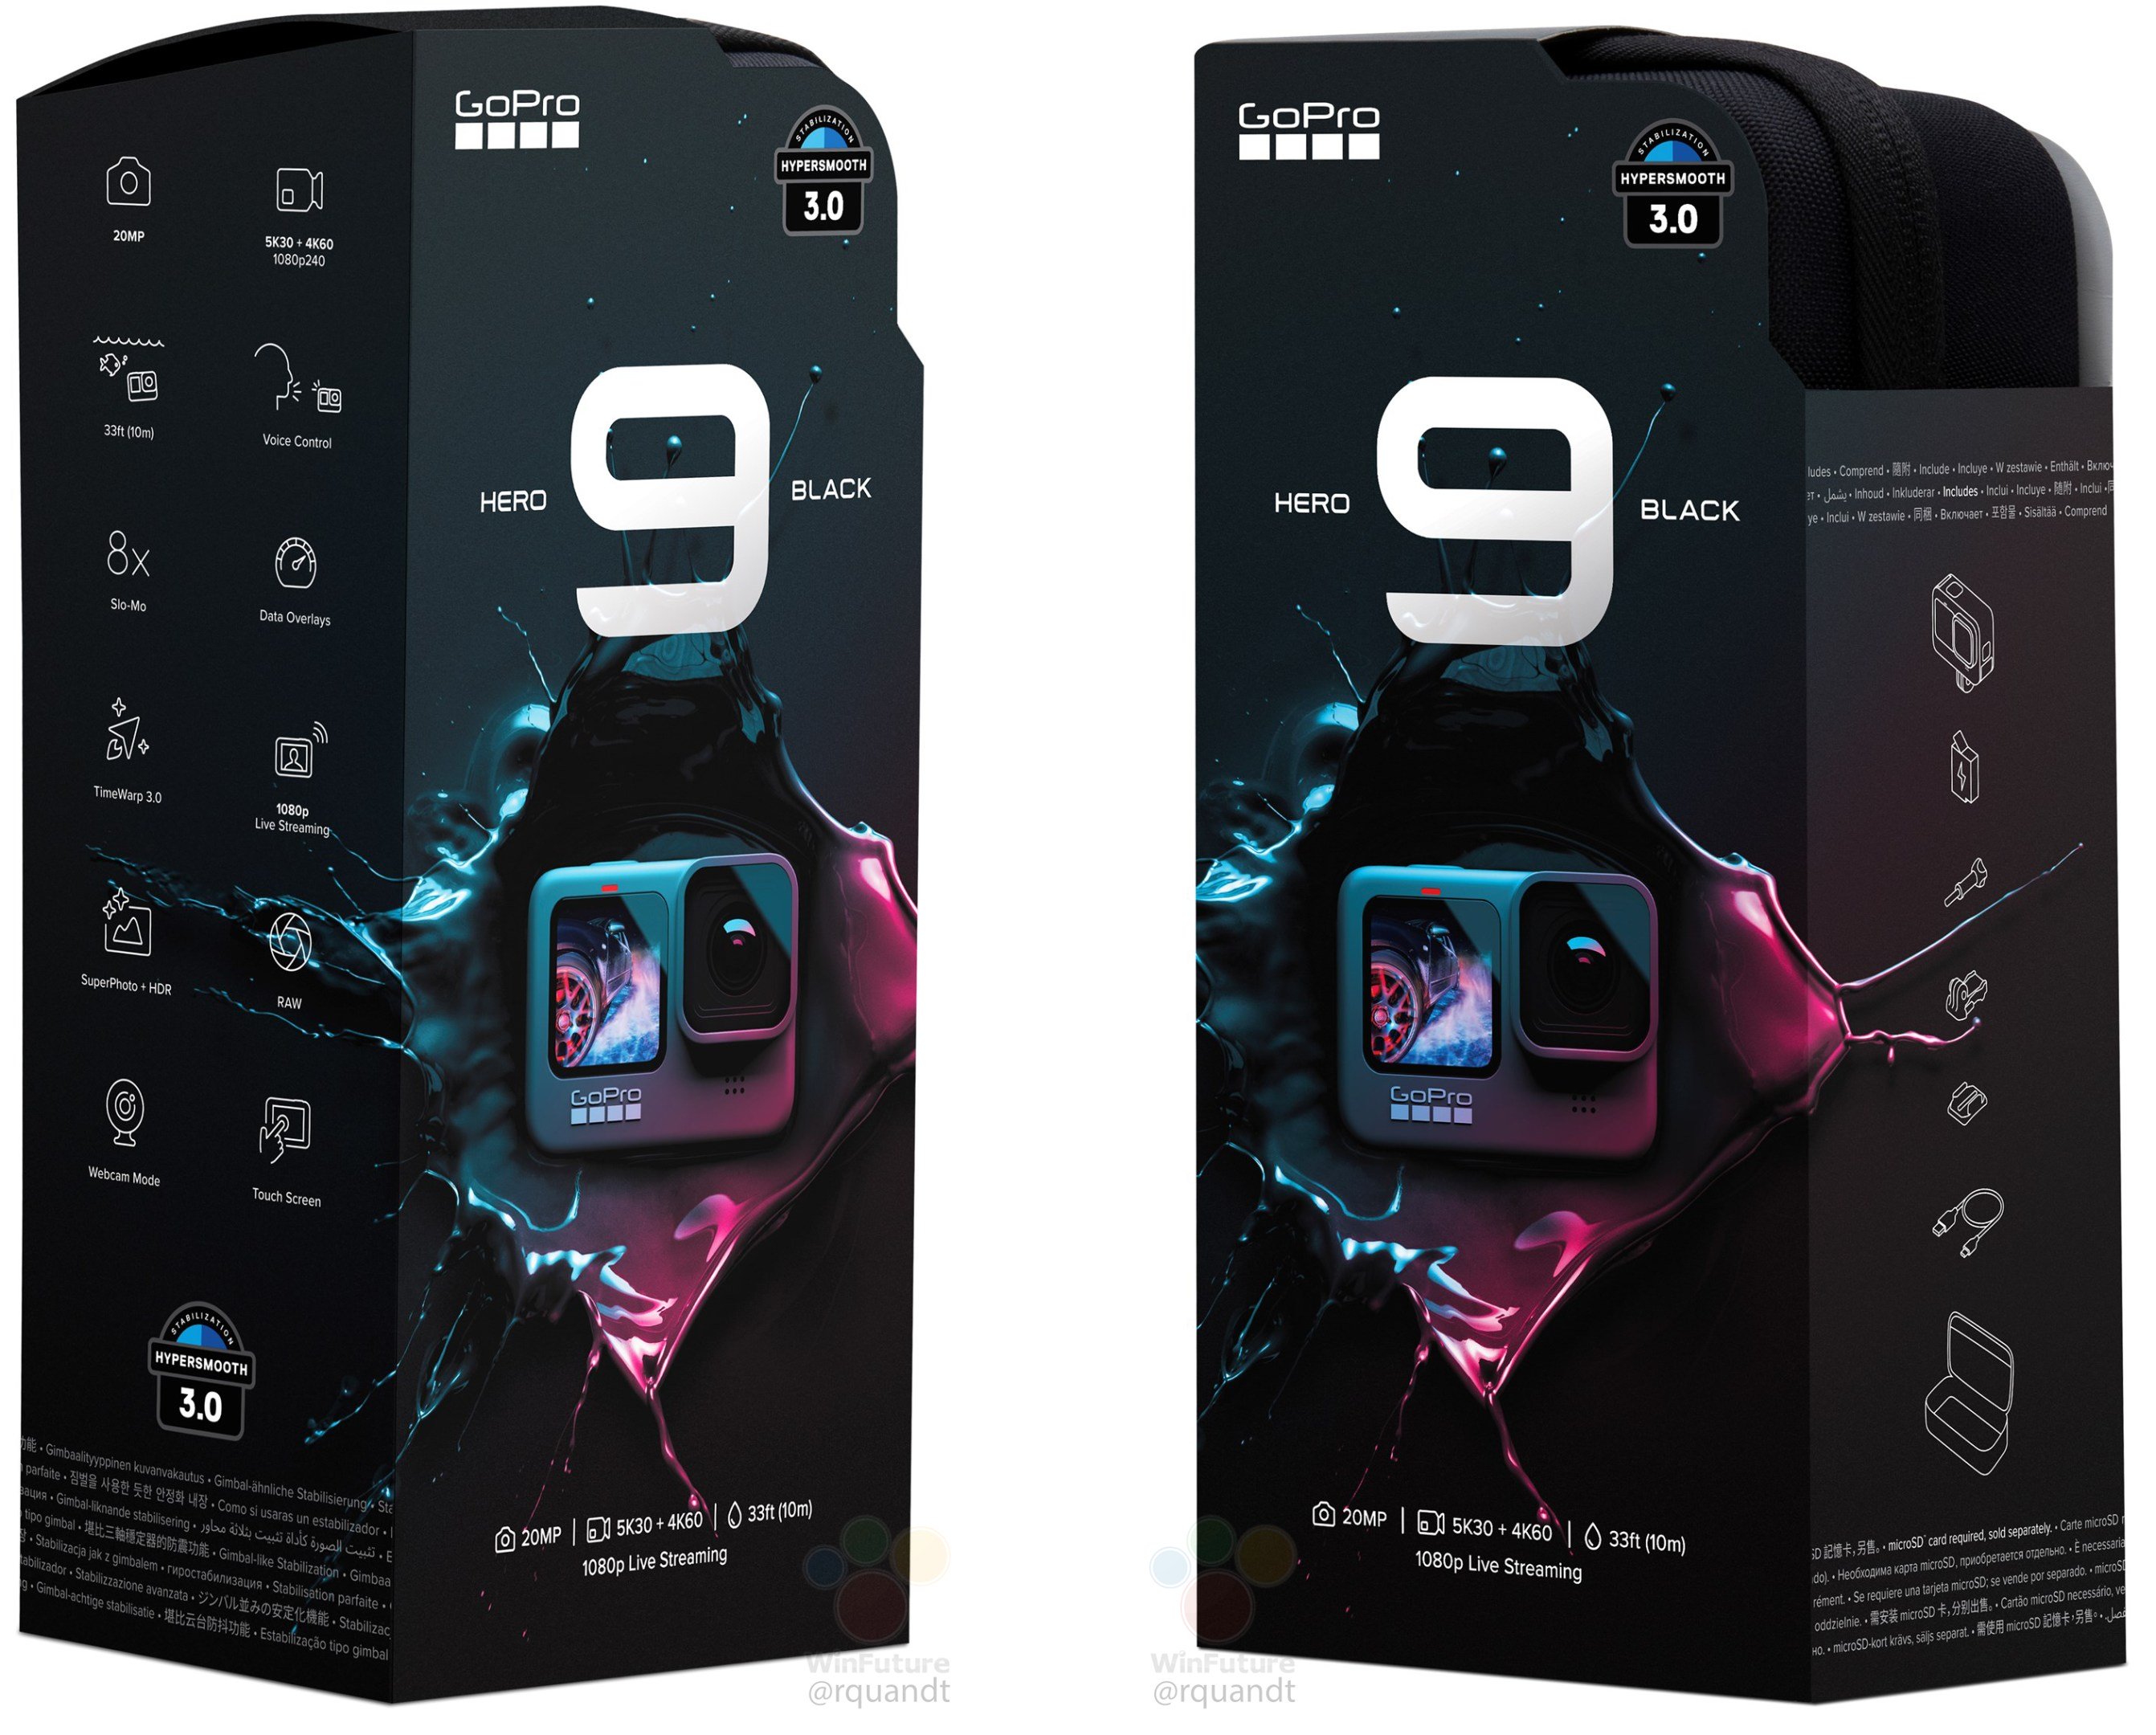 GoPro Hero 9 Black leaked marketing assets confirm 20 MP camera